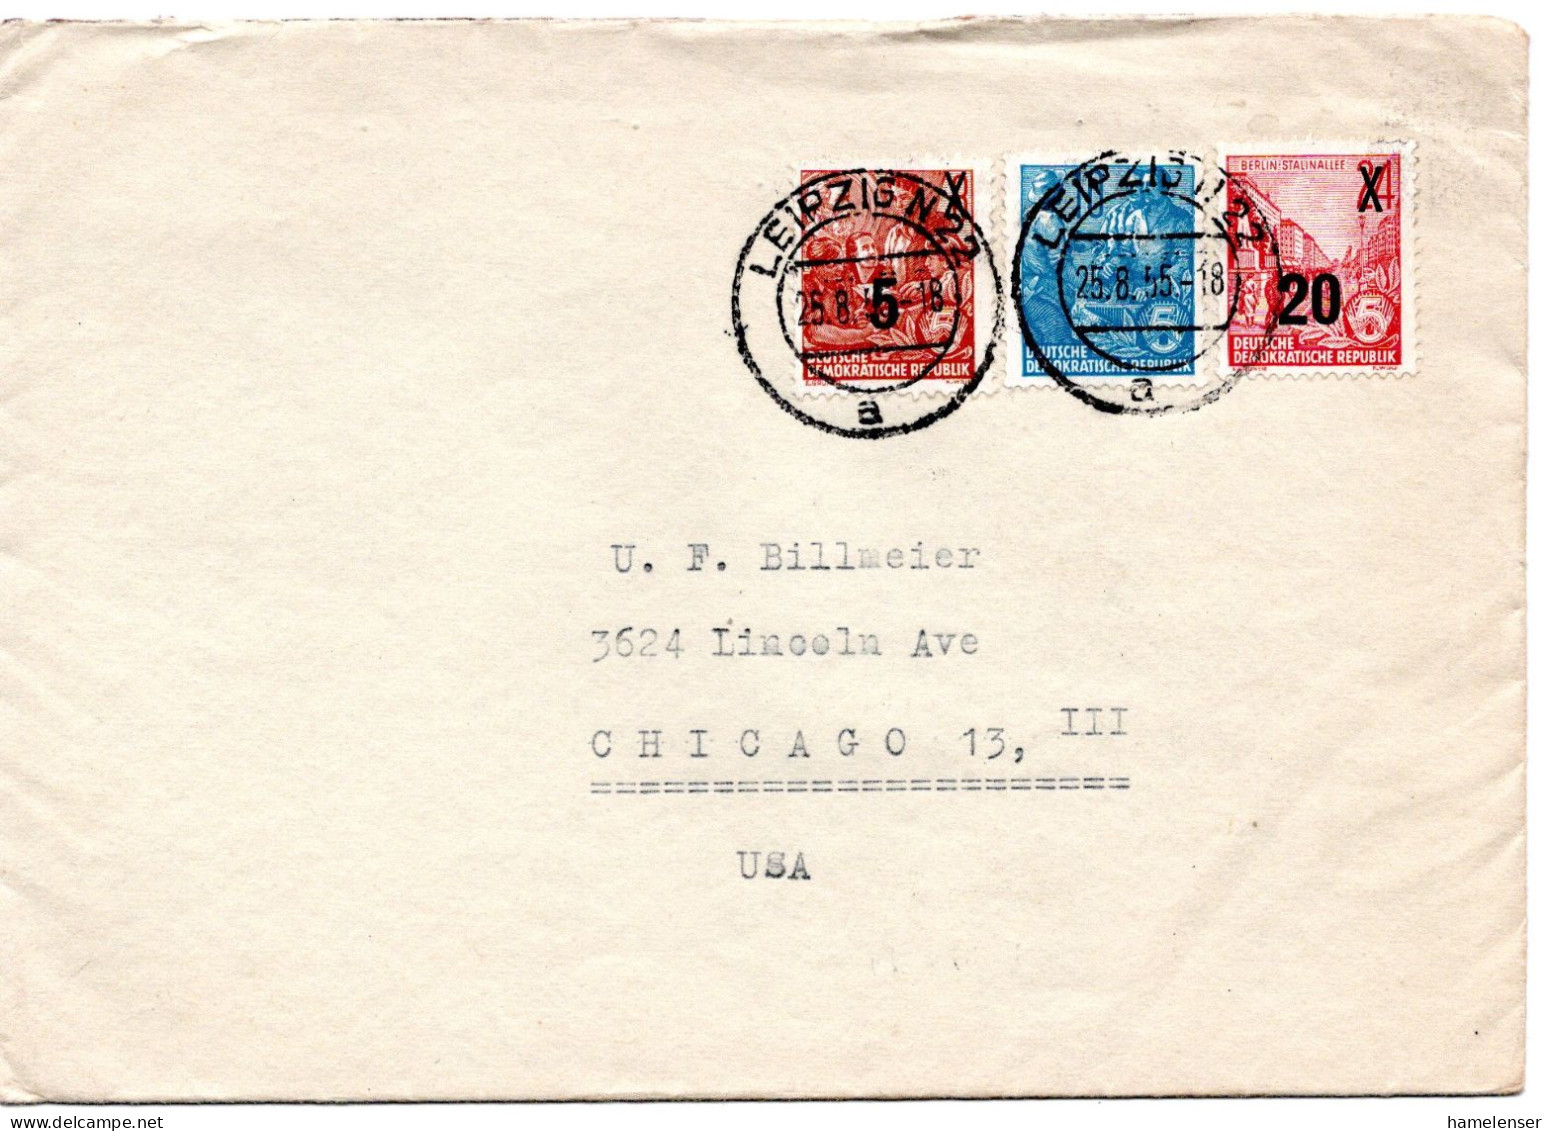 64983 - DDR - 1955 - 20/24Pfg Fuenfjahrplan MiF A Bf LEIPZIG -> Chicago, IL (USA), Rs Spendenmarken "Nationale Front" - Lettres & Documents